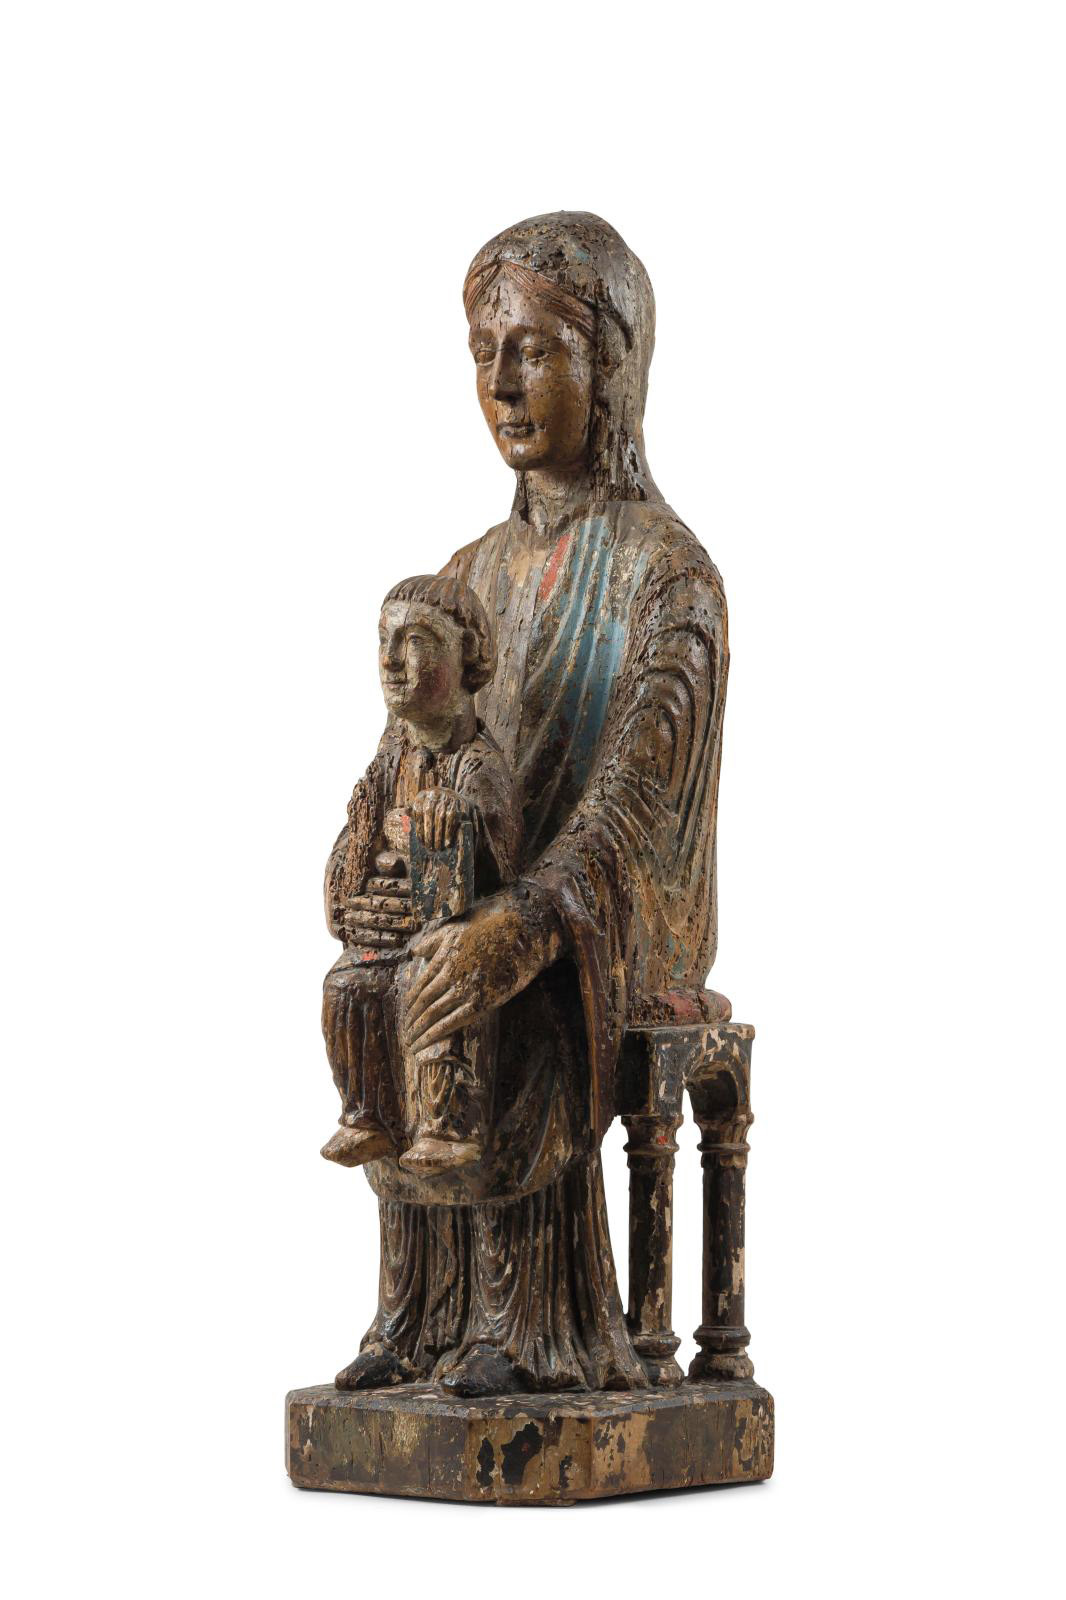 A Rare 12th-Century Romanesque Madonna and Child